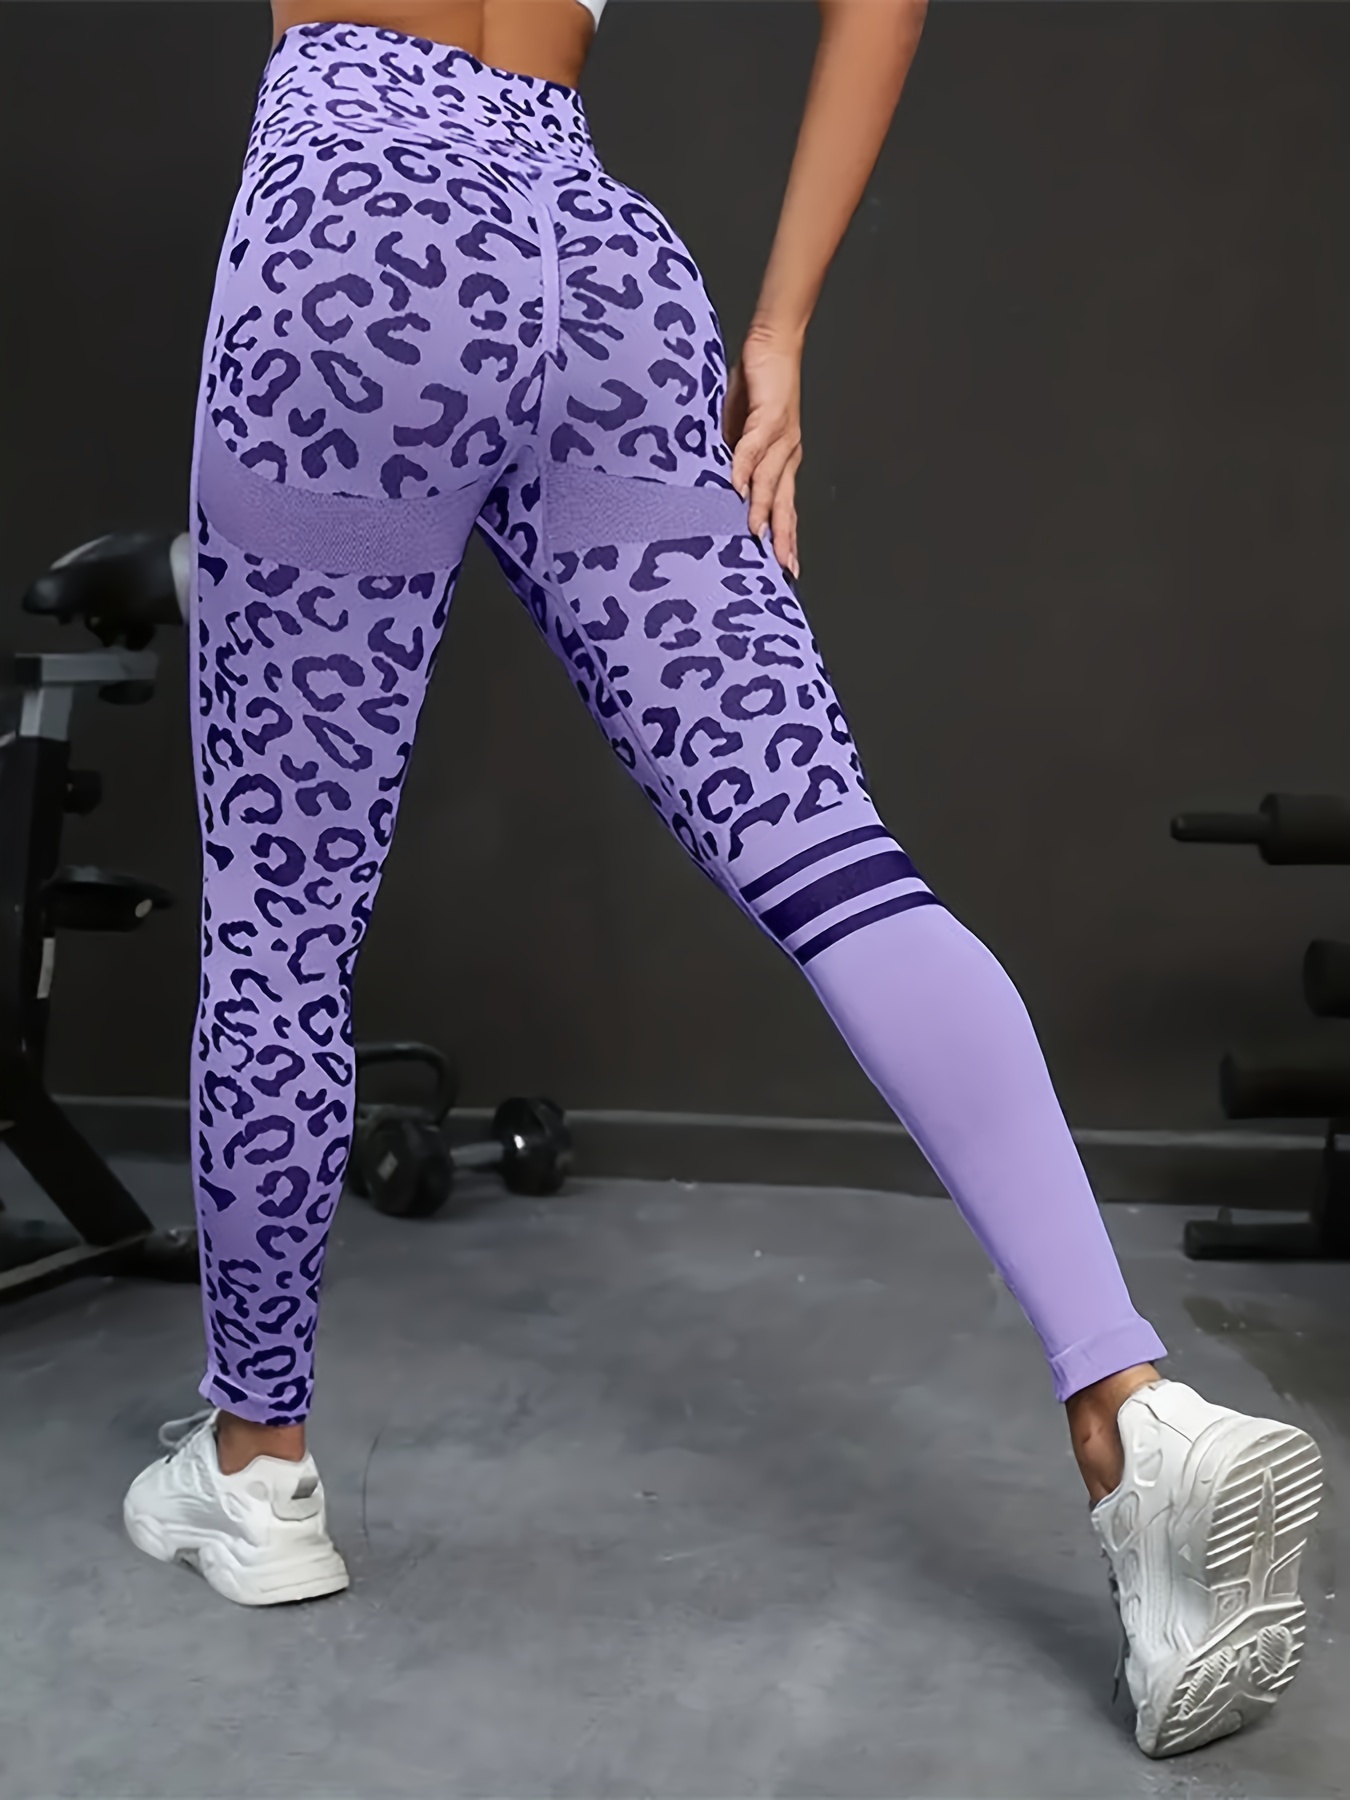 Leopard Leggings Women Yoga Pants Lycra Leggins Womens Gym Legging